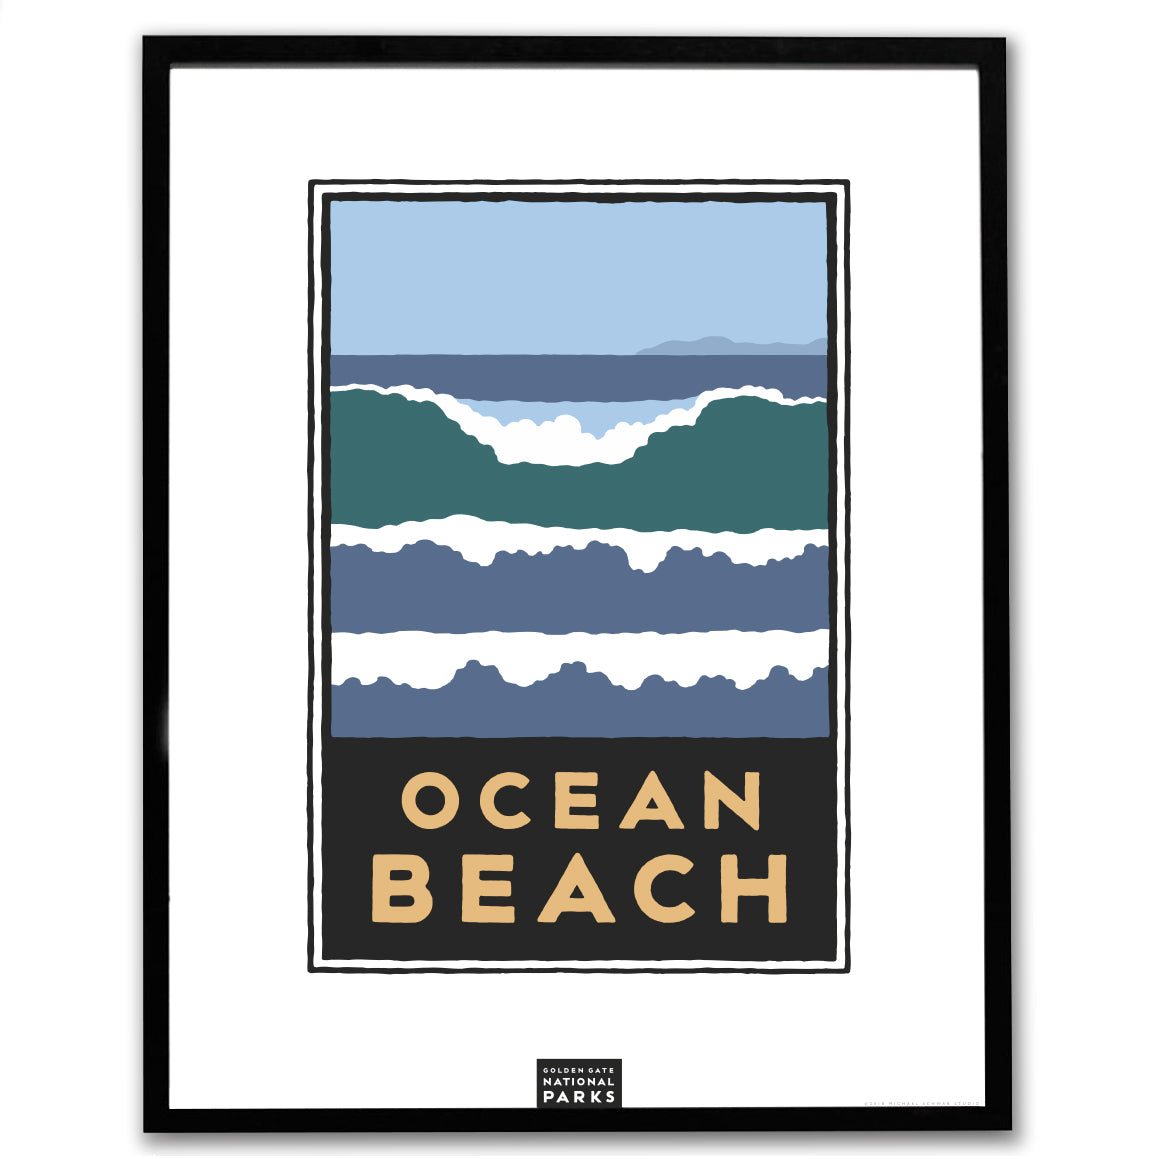 Ocean Beach giclee poster in black frame, art by Michael Schwab, the Golden Gate National Parks Conservancy